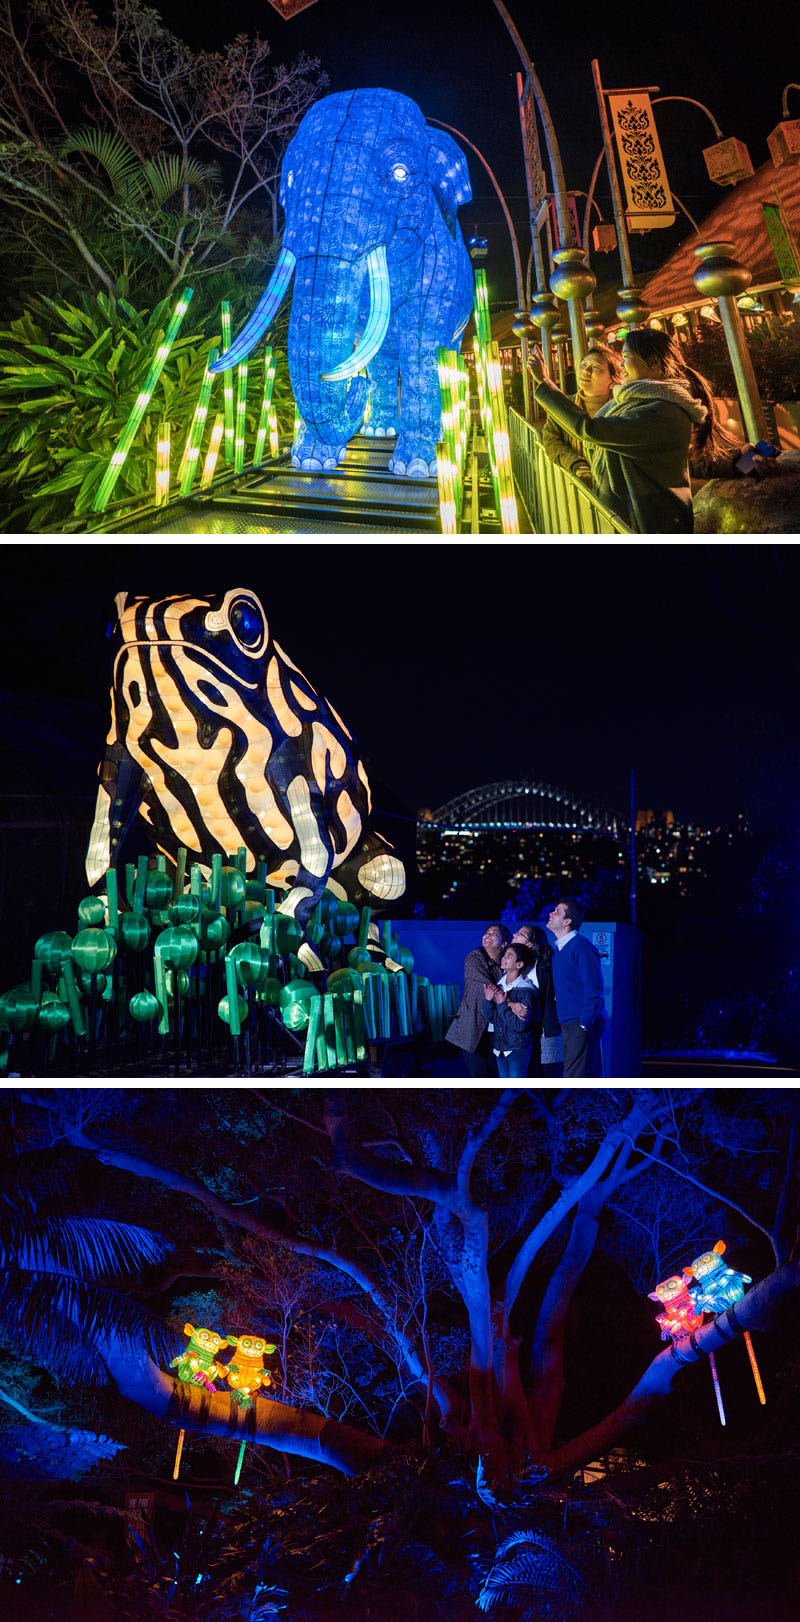 VIVID 2016, a light, music and idea festival, takes over Sydney, Australia for 23 nights.